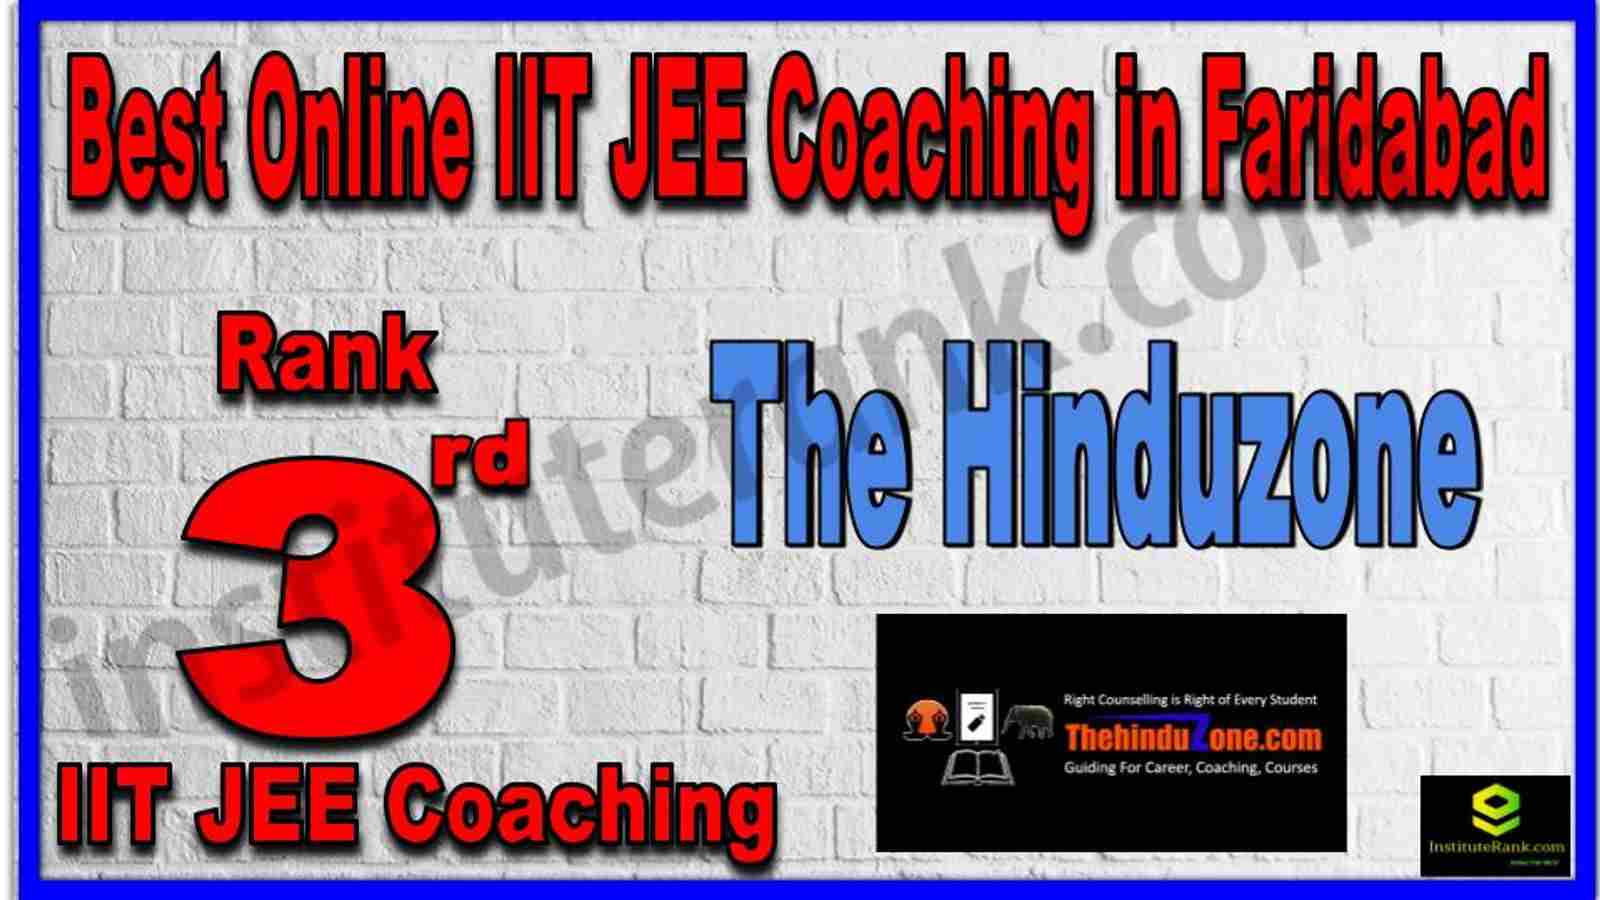 Rank 3rd Best Online IIT JEE Coaching in Faridabad